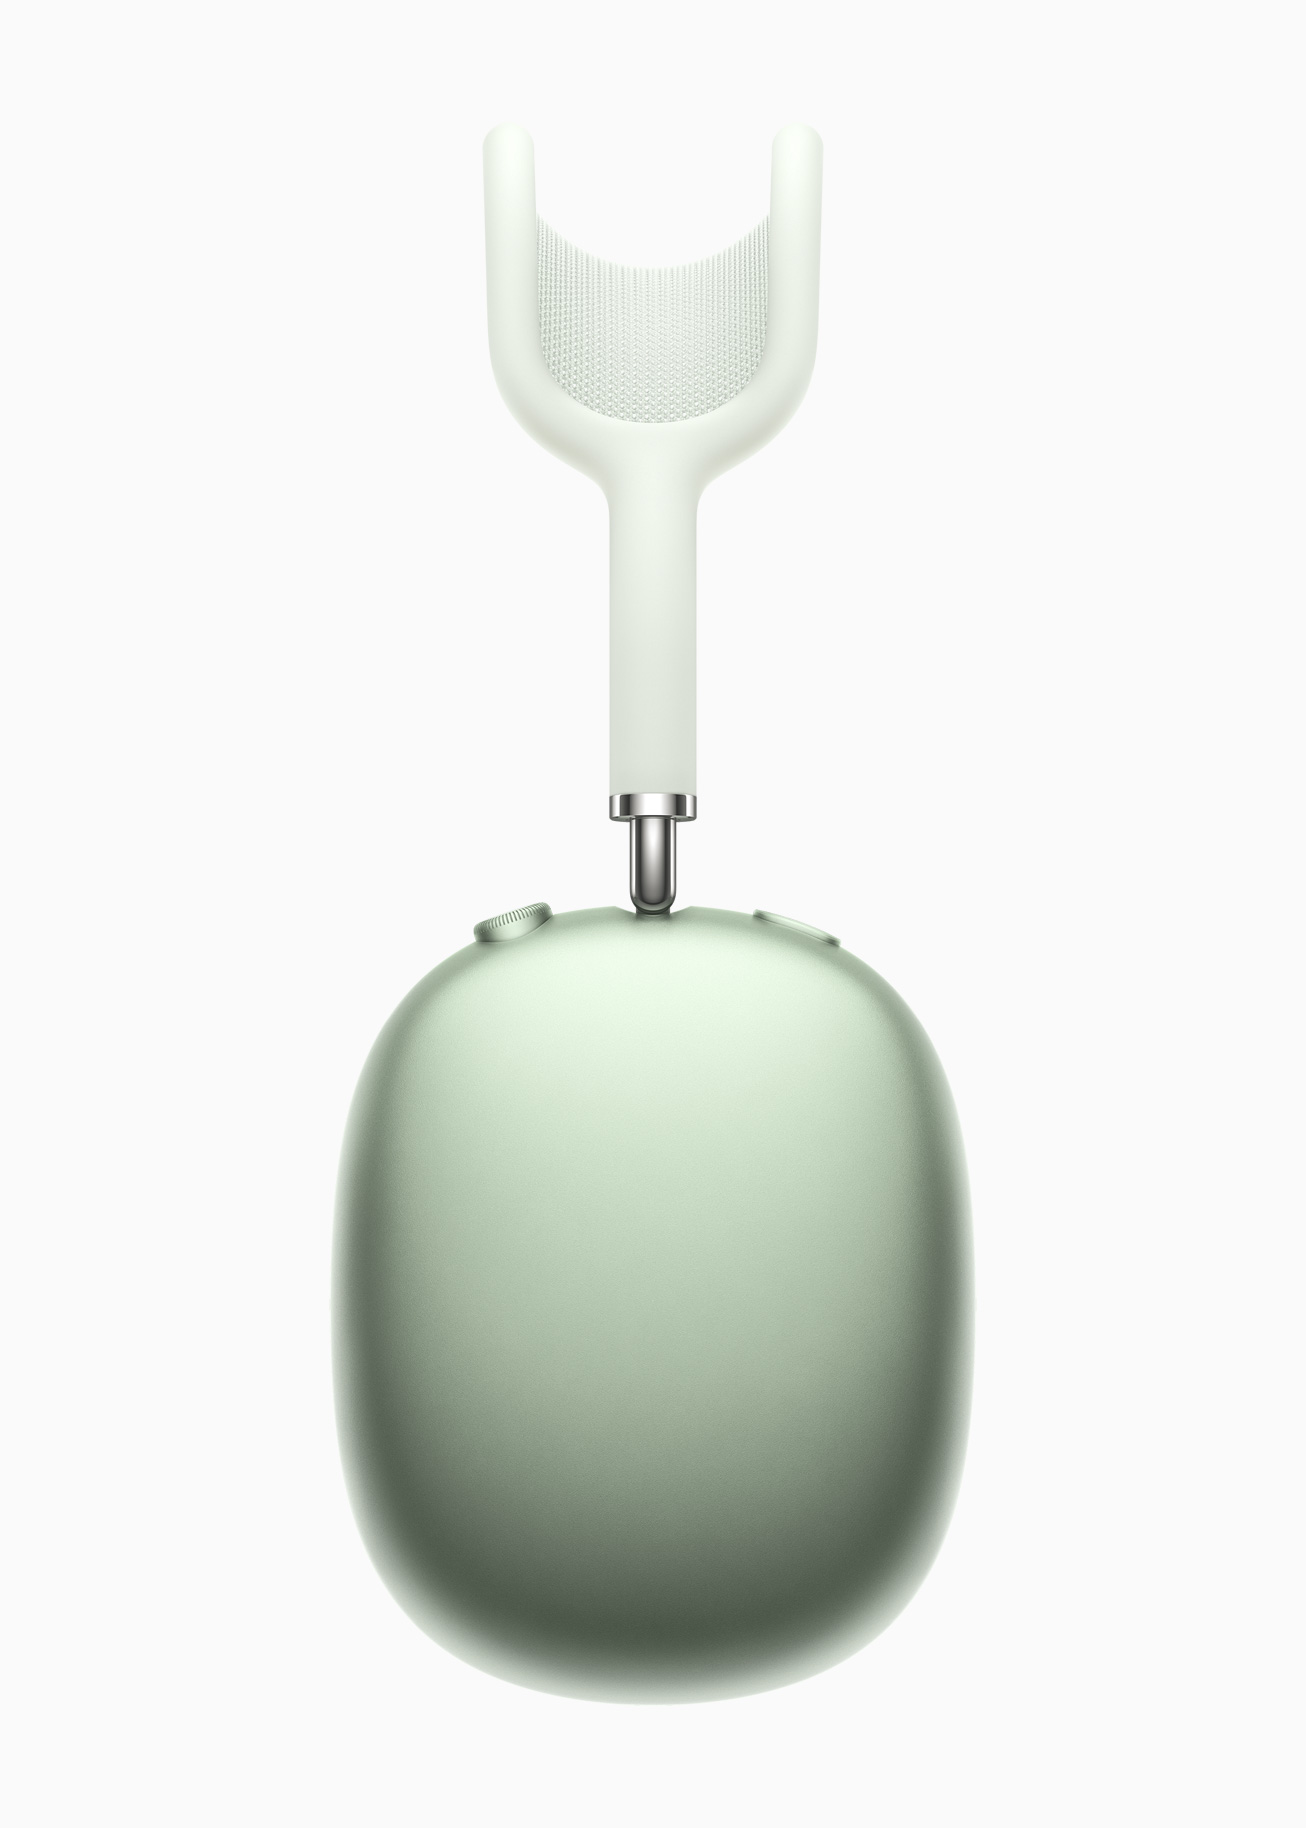 Apple AirPods Max in Green | Headphones.com